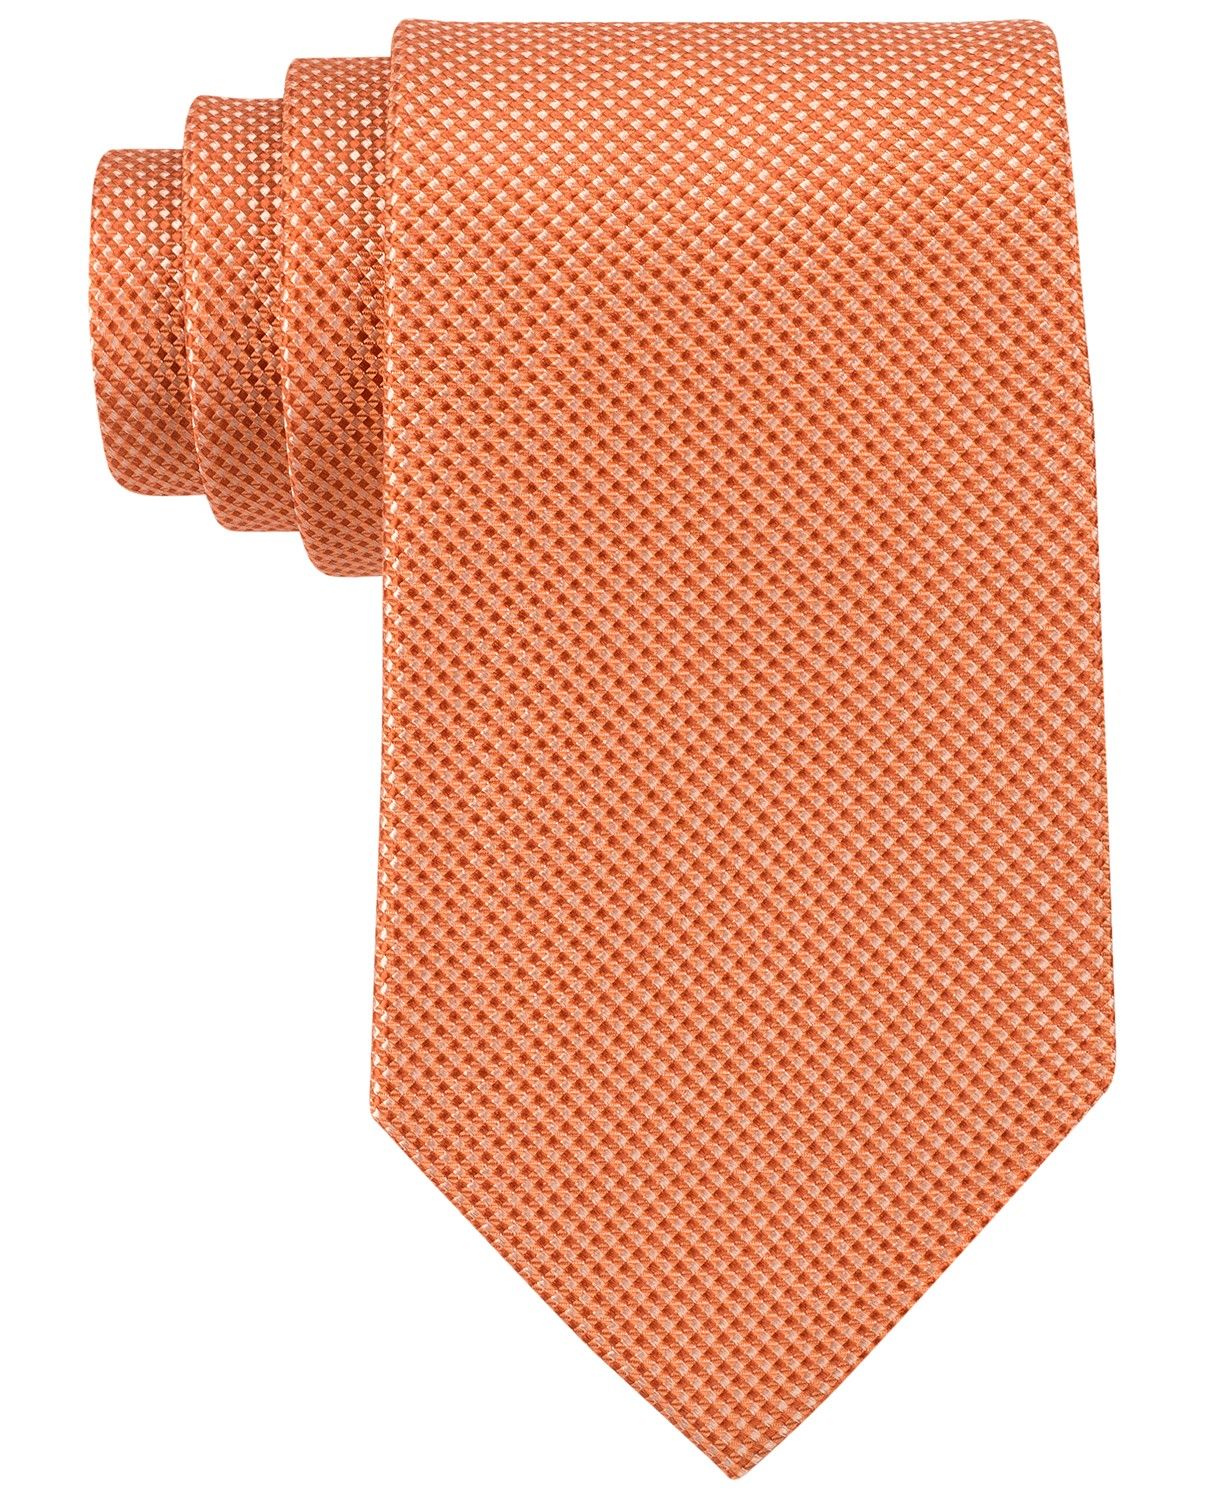 <br>Color: Oranges<br>Pattern: Solid<br>Style: Neck Tie<br>Width: Skinny (Material: Silk